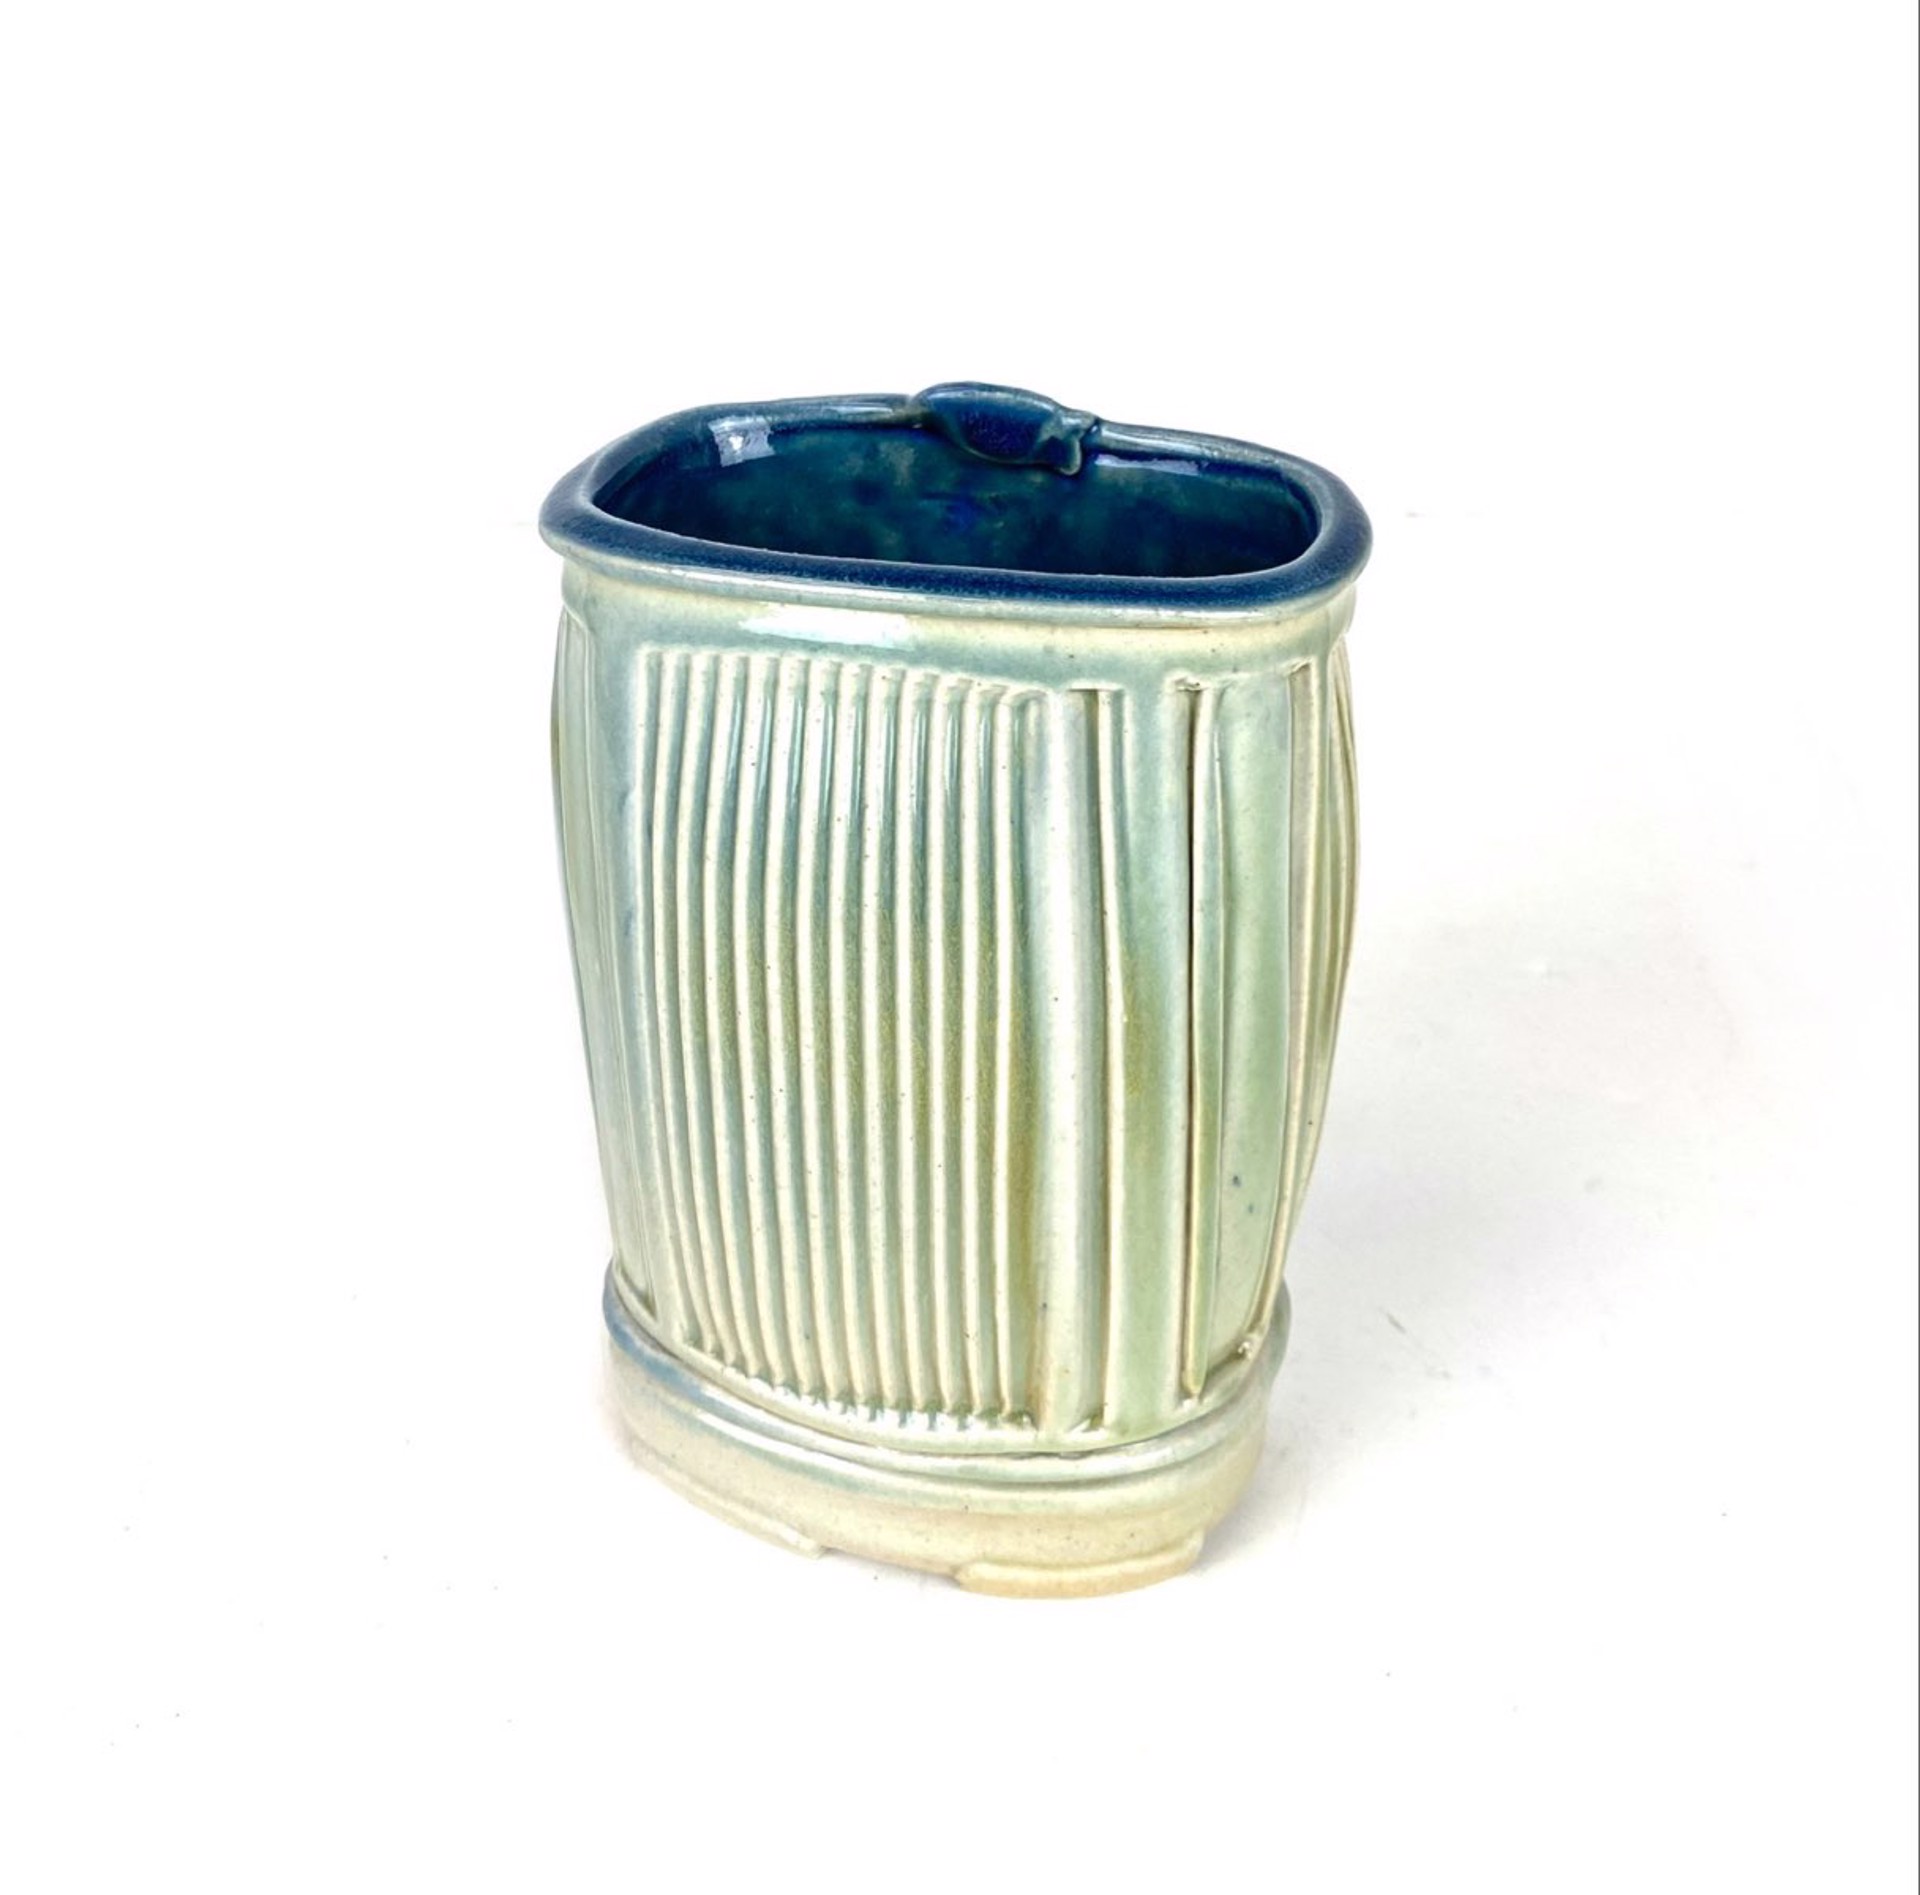 Linear Vase by Sandy Blain